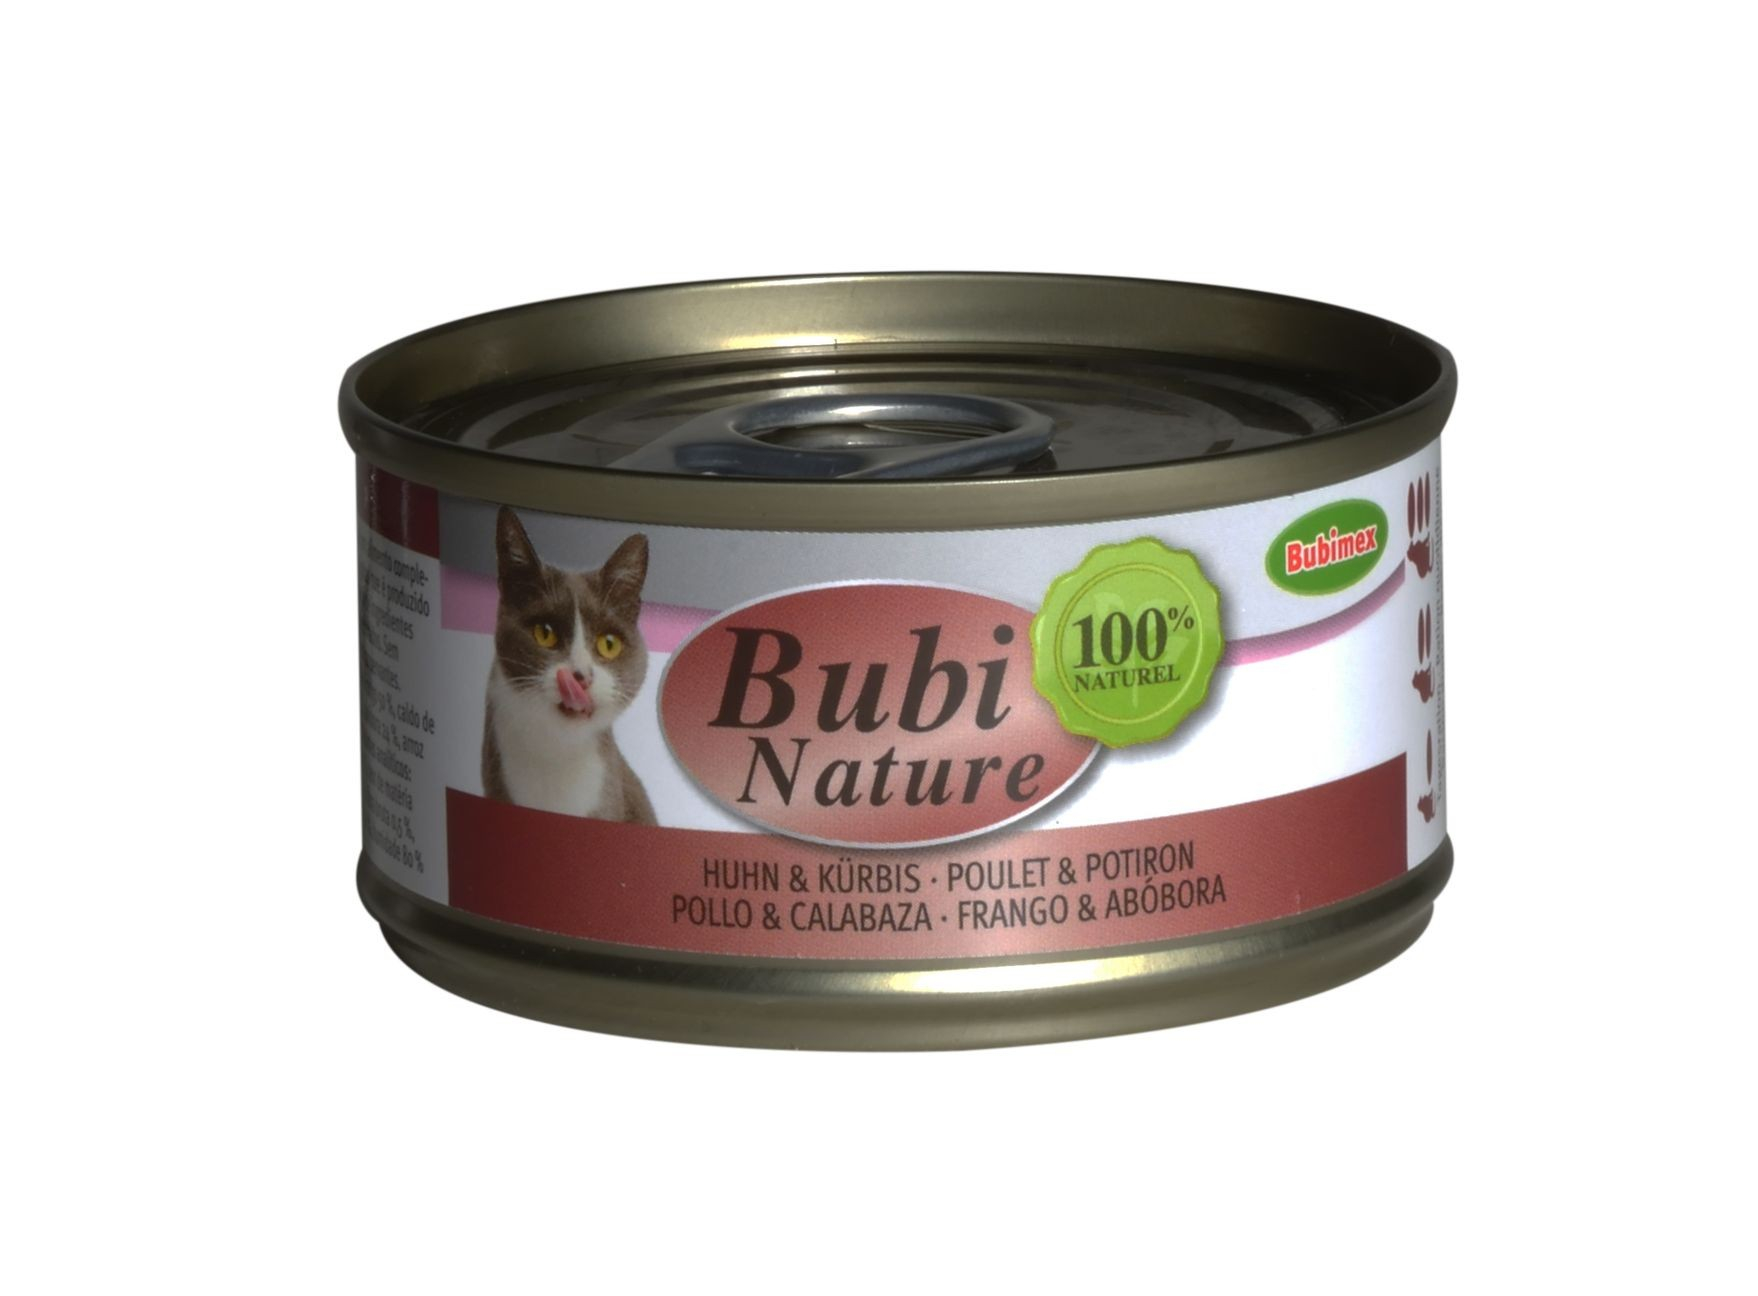 Pâtée BUBIMEX Bubi Nature Poulet & Potiron pour chat